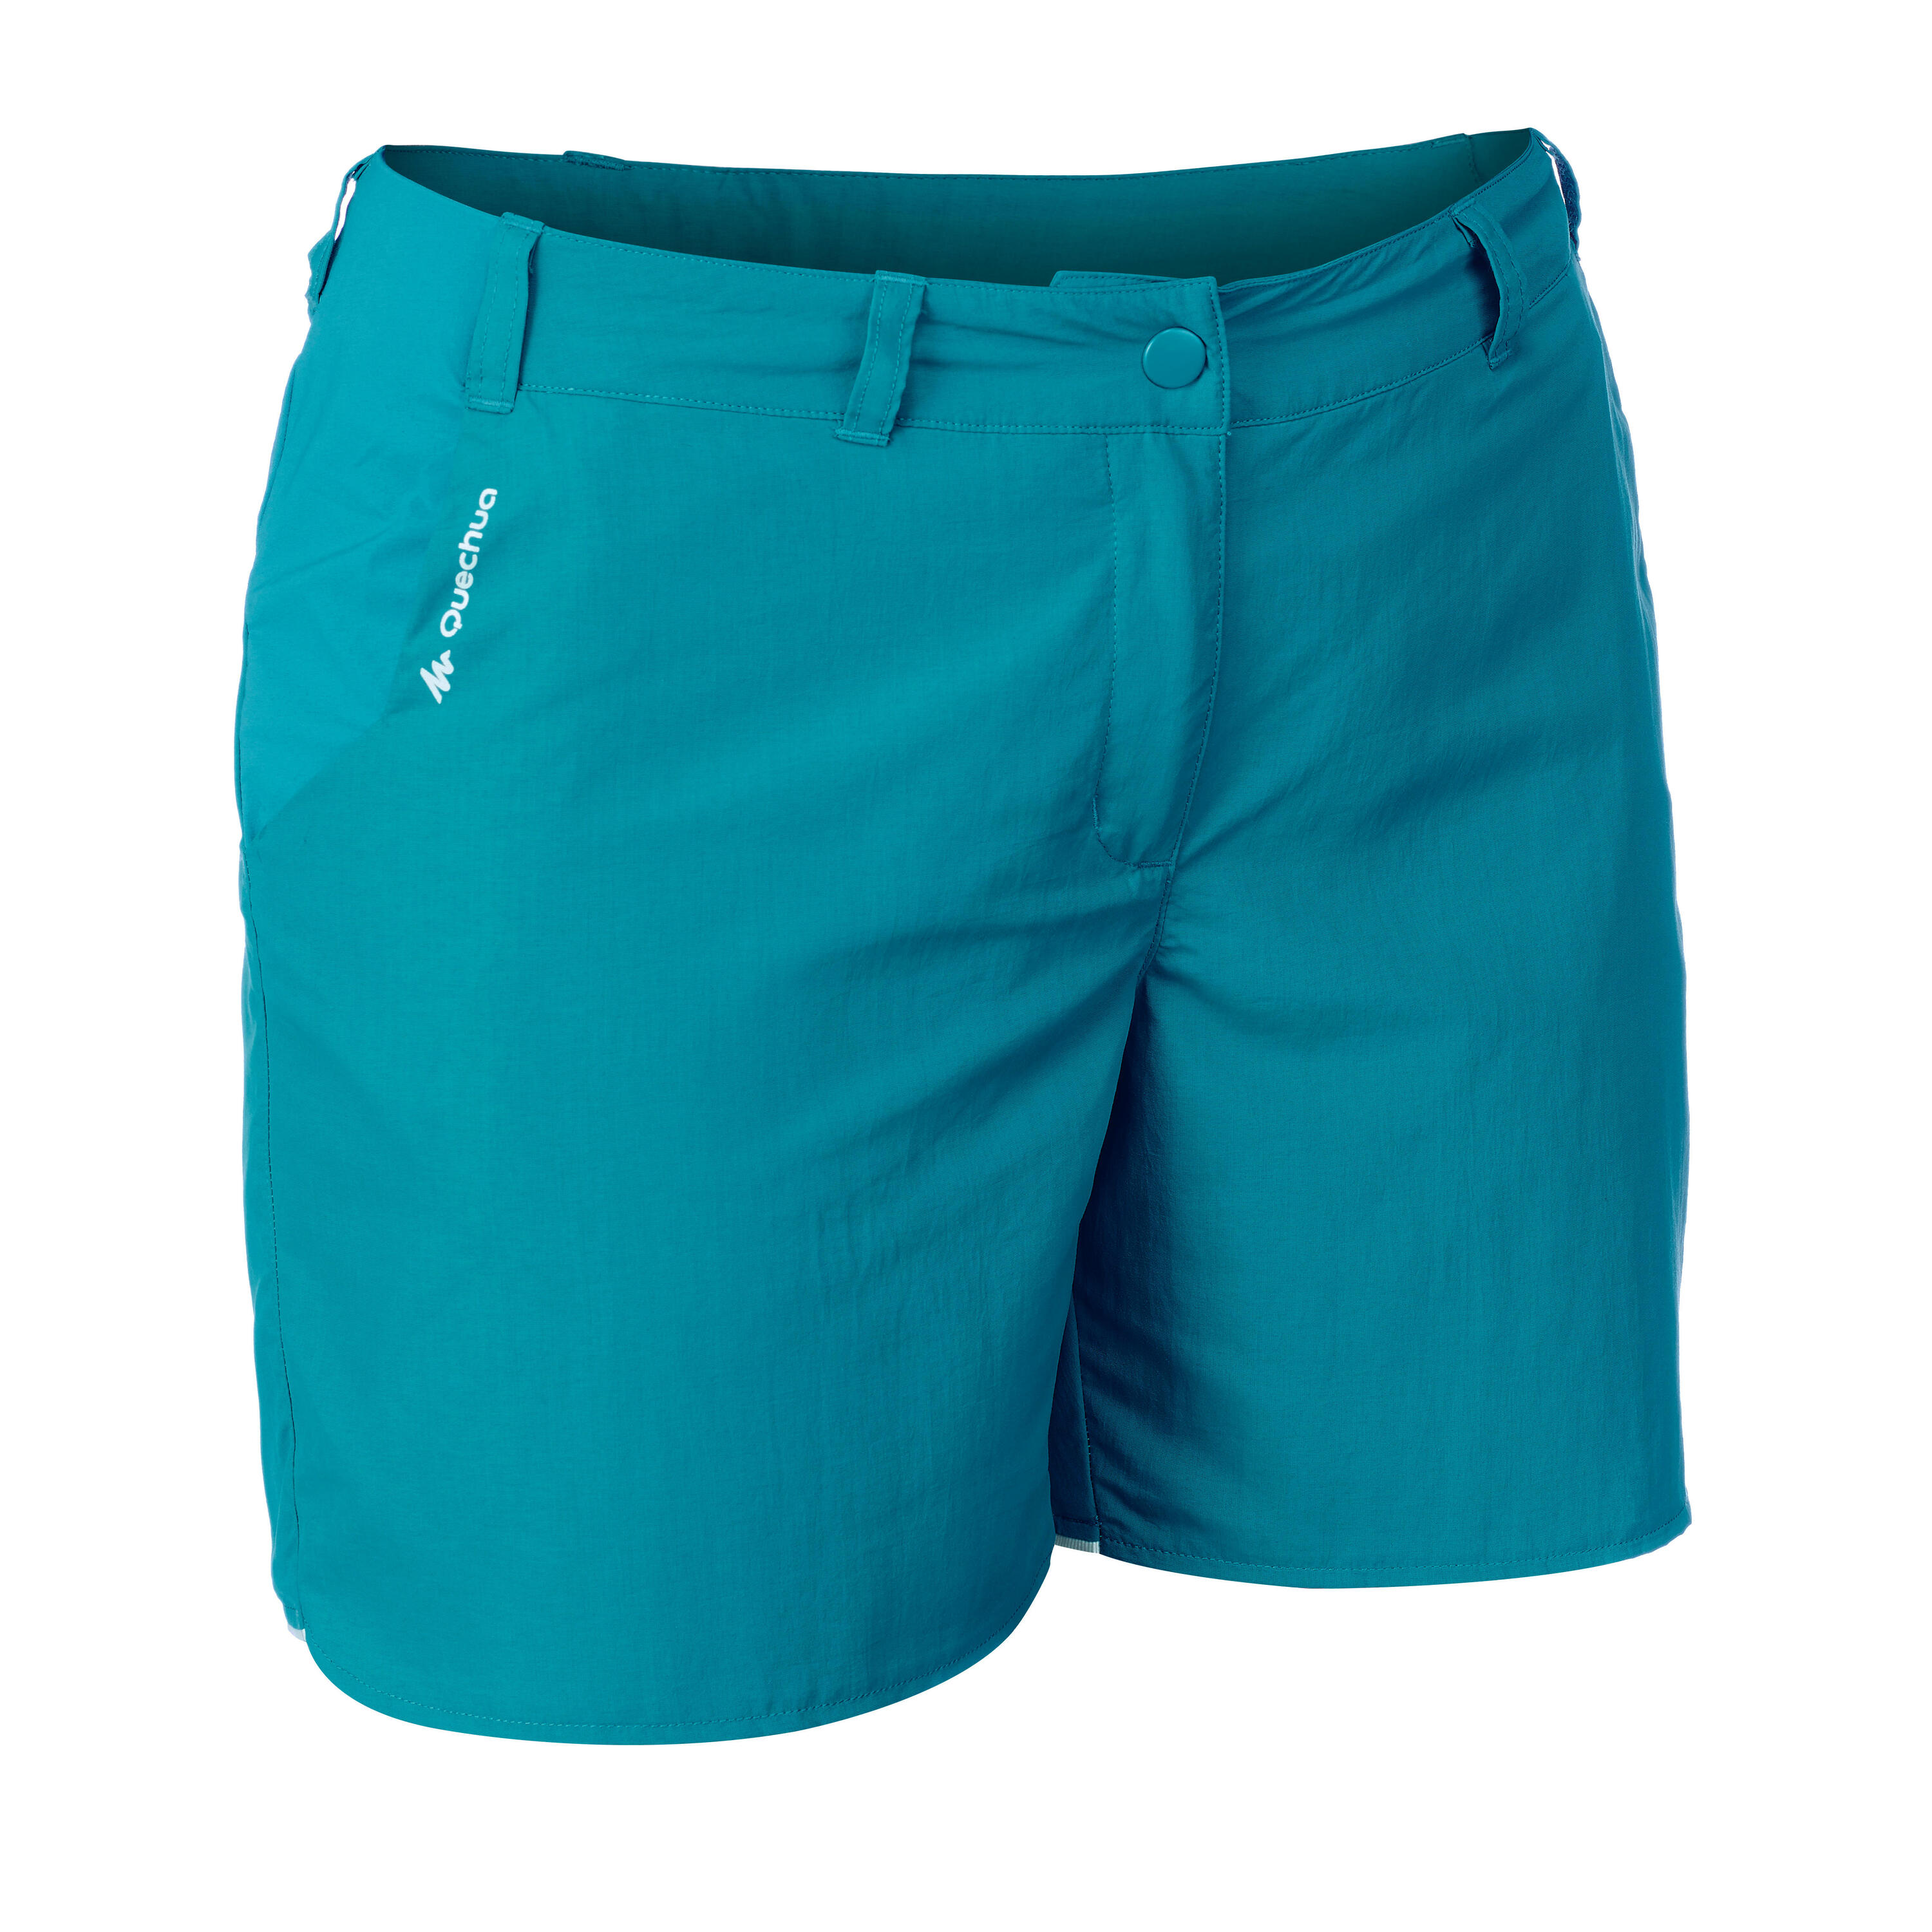 MH100 Women's Mountain Hiking Shorts - Turquoise Blue 1/7